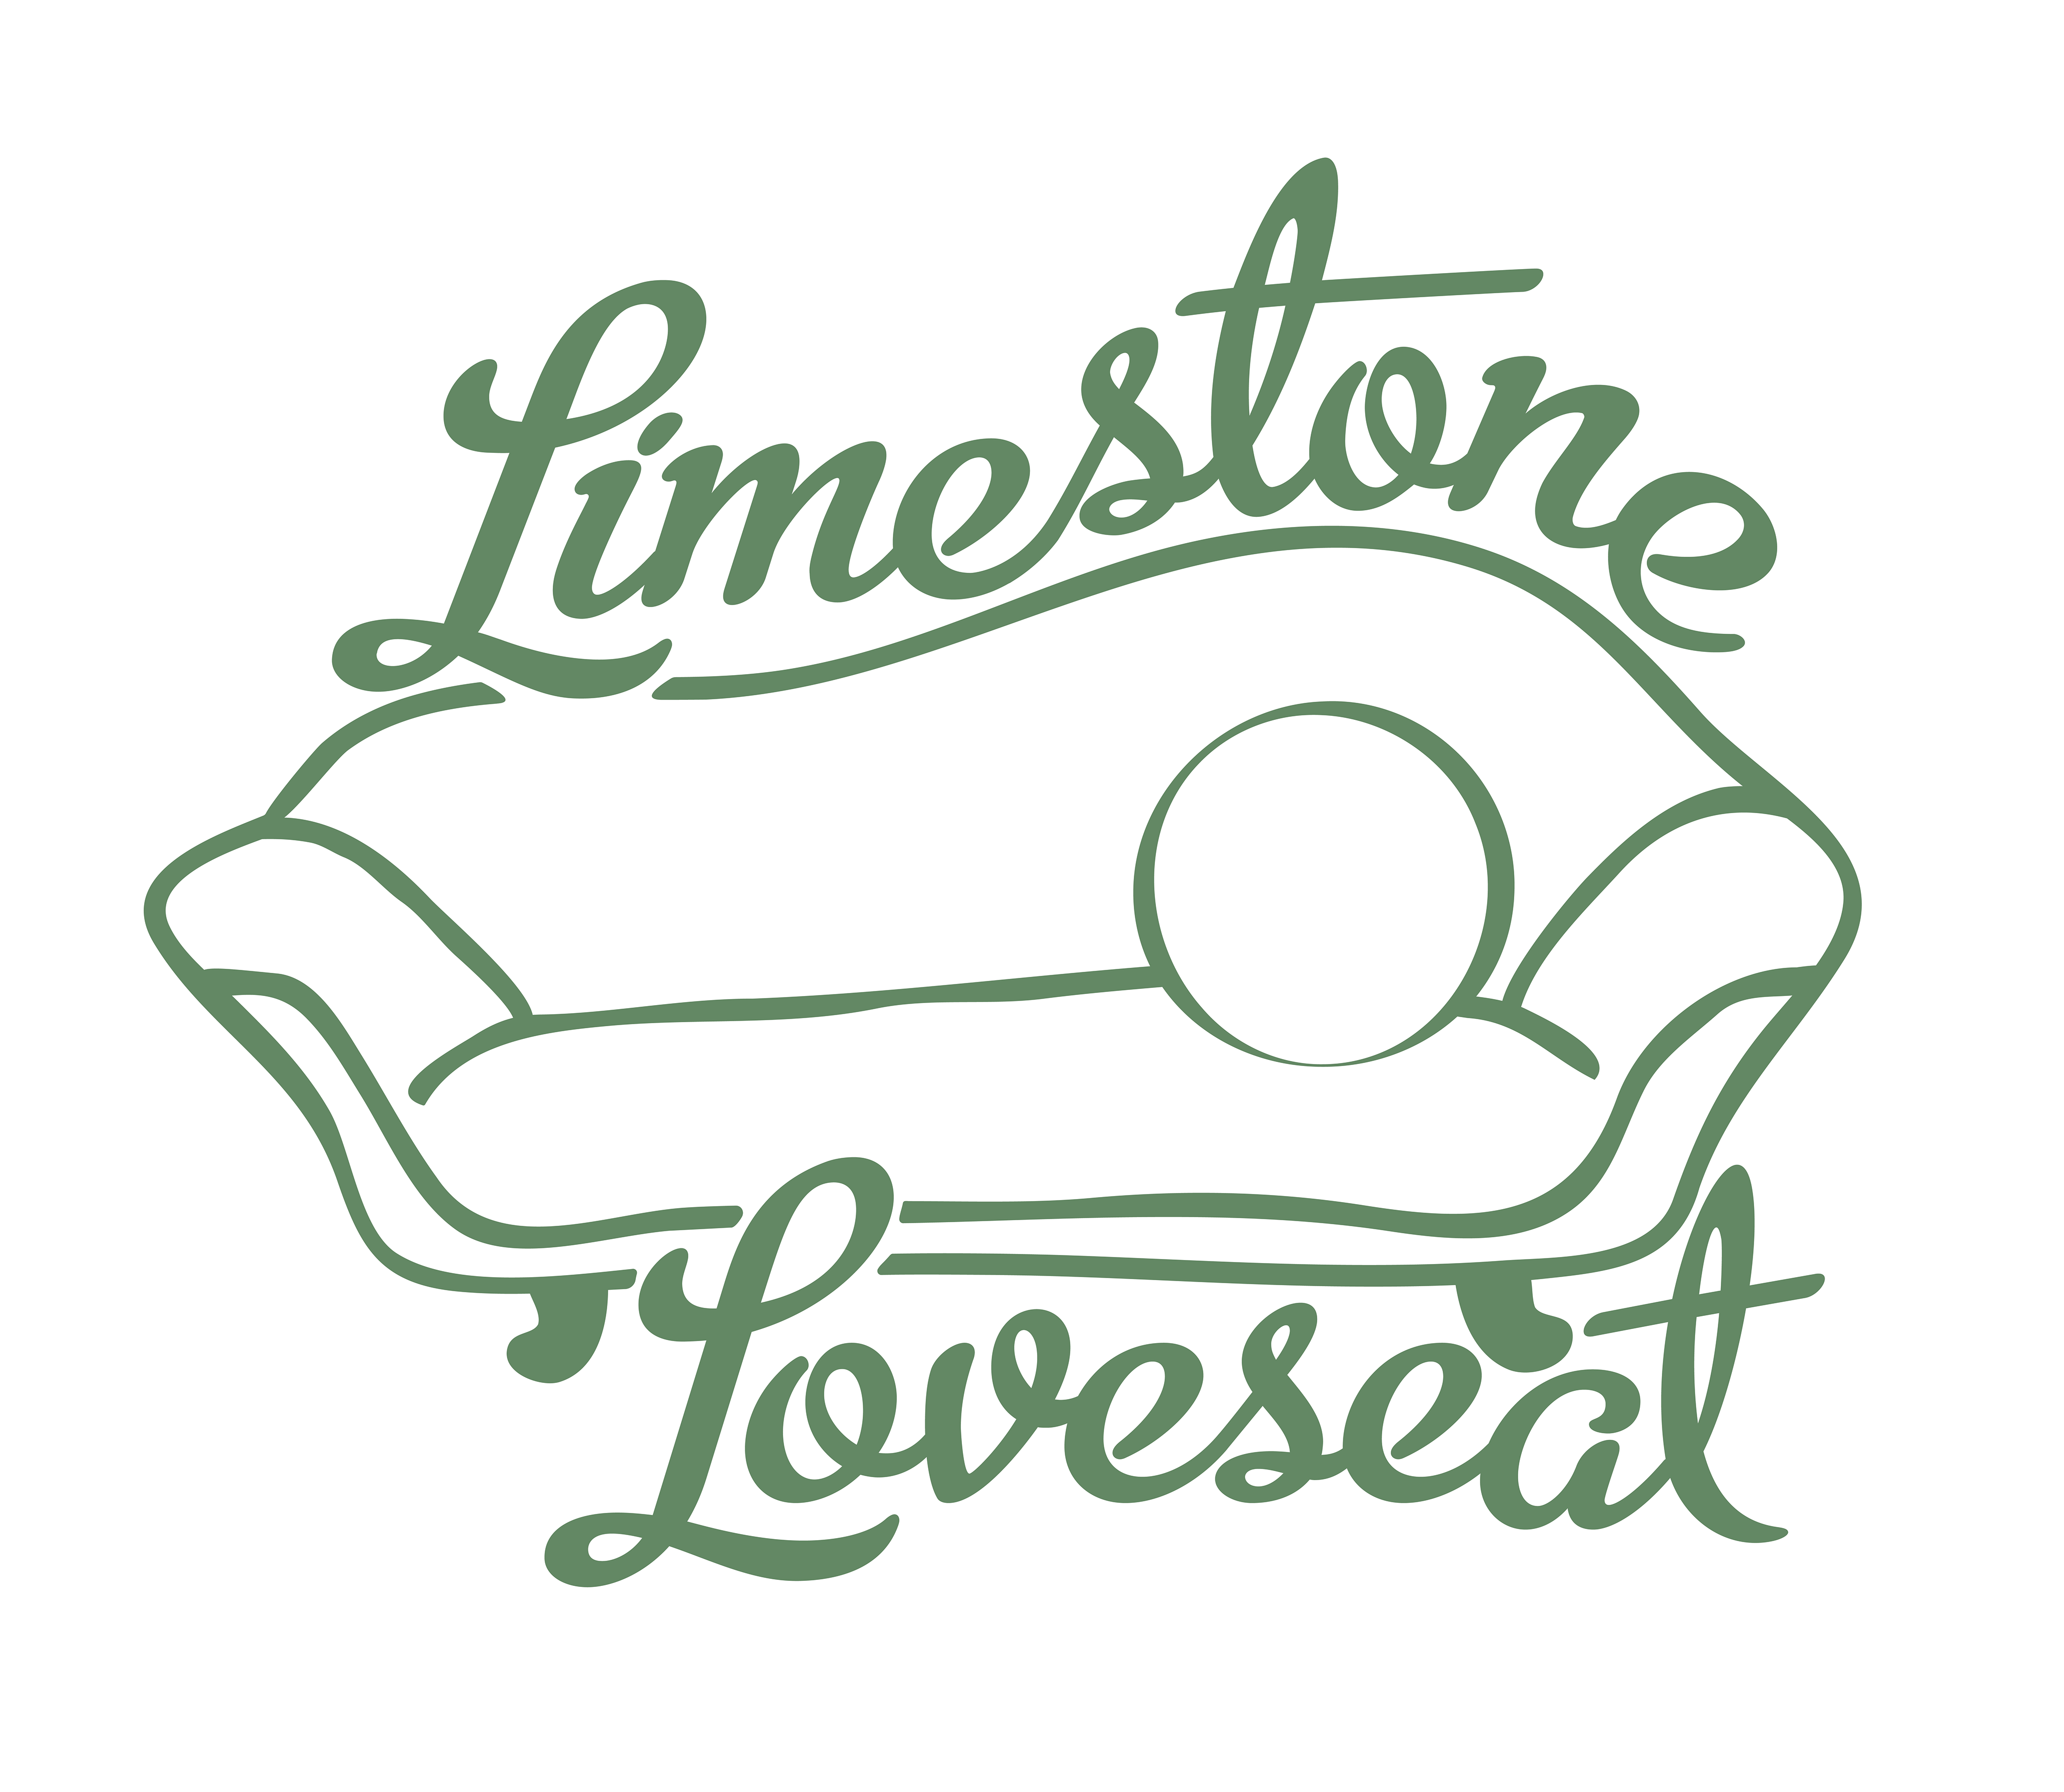 Limestone Loveseat